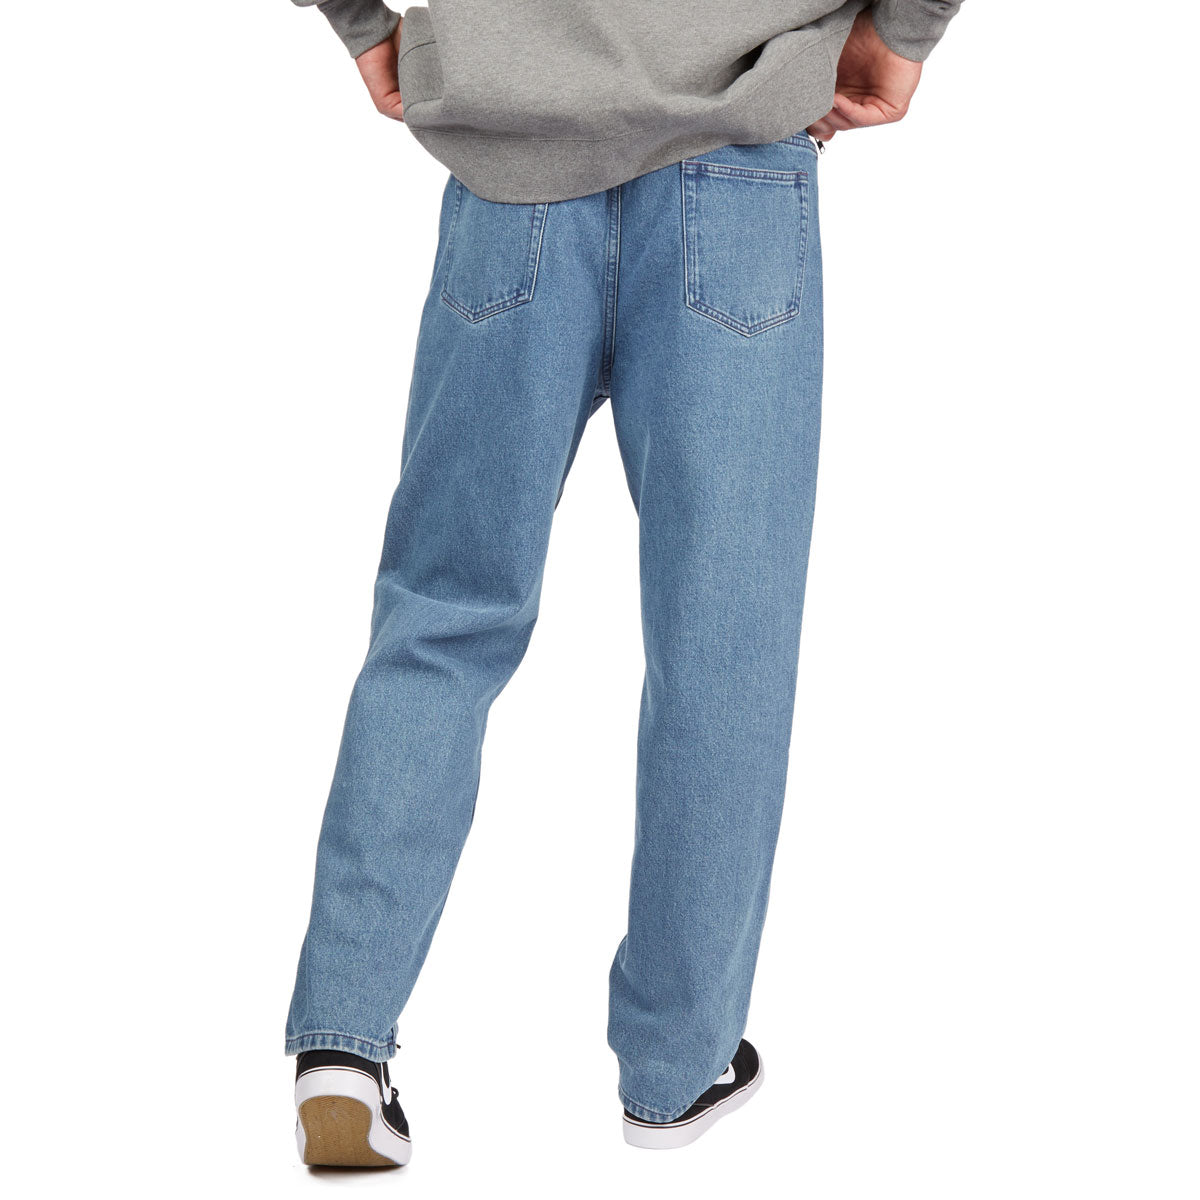 CCS Original Relaxed Taper Jeans - Medium Wash image 3